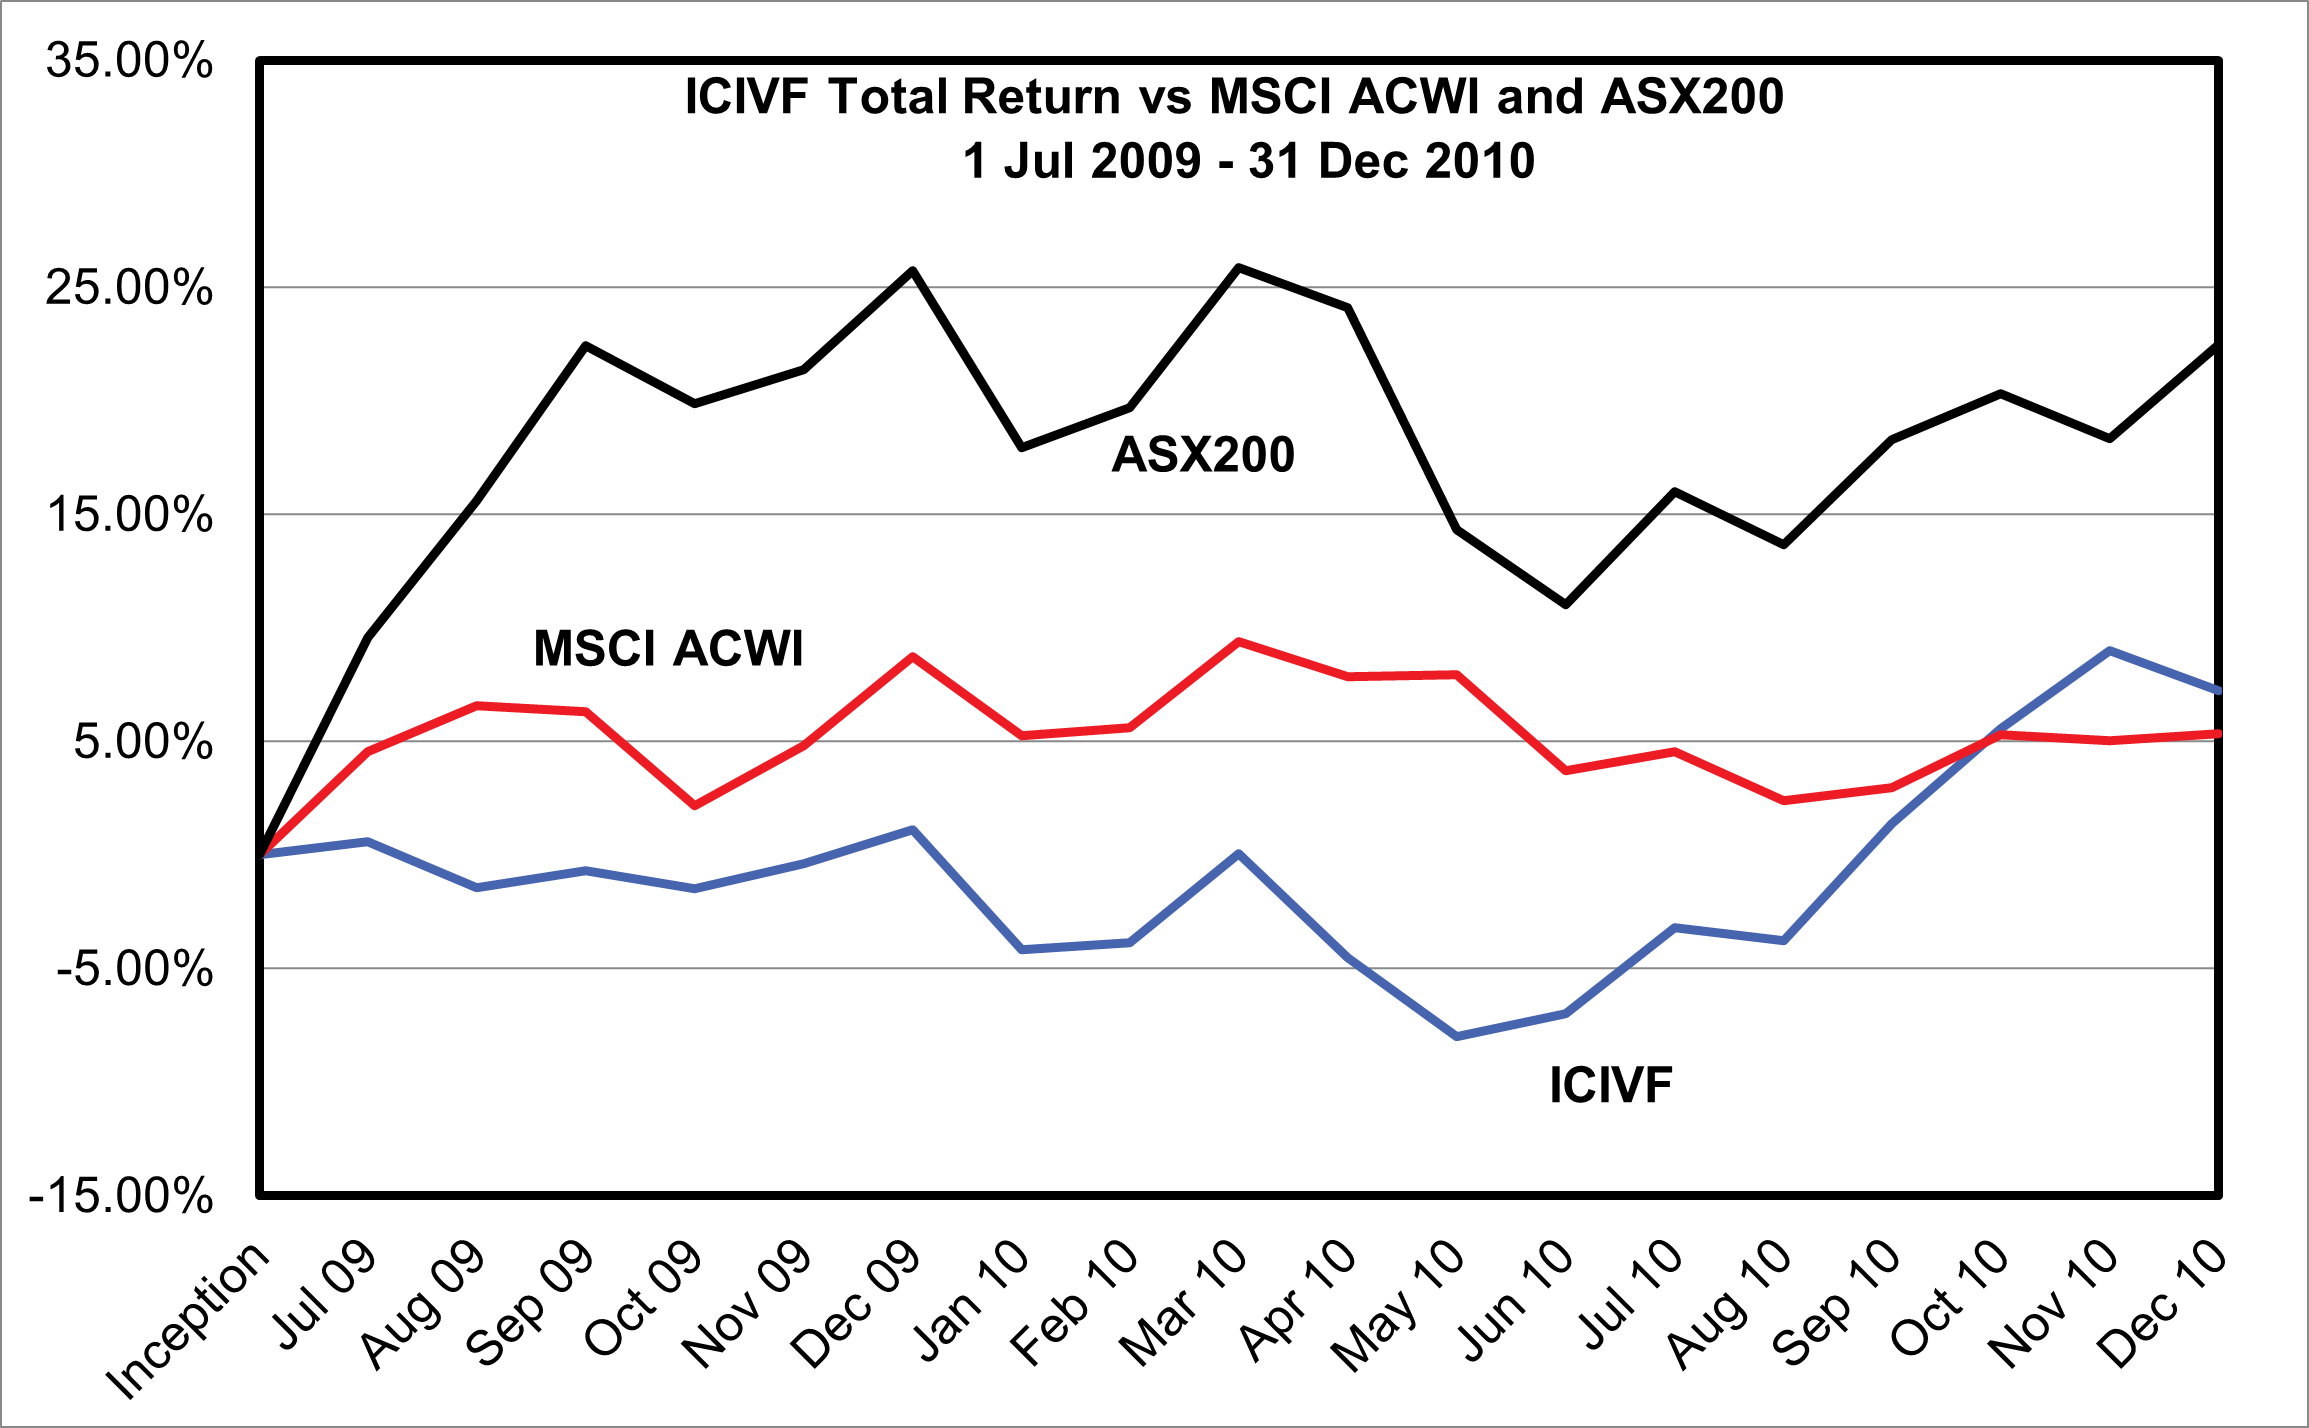 ICIVF Total Return vs MSCI ACWI and ASX 200